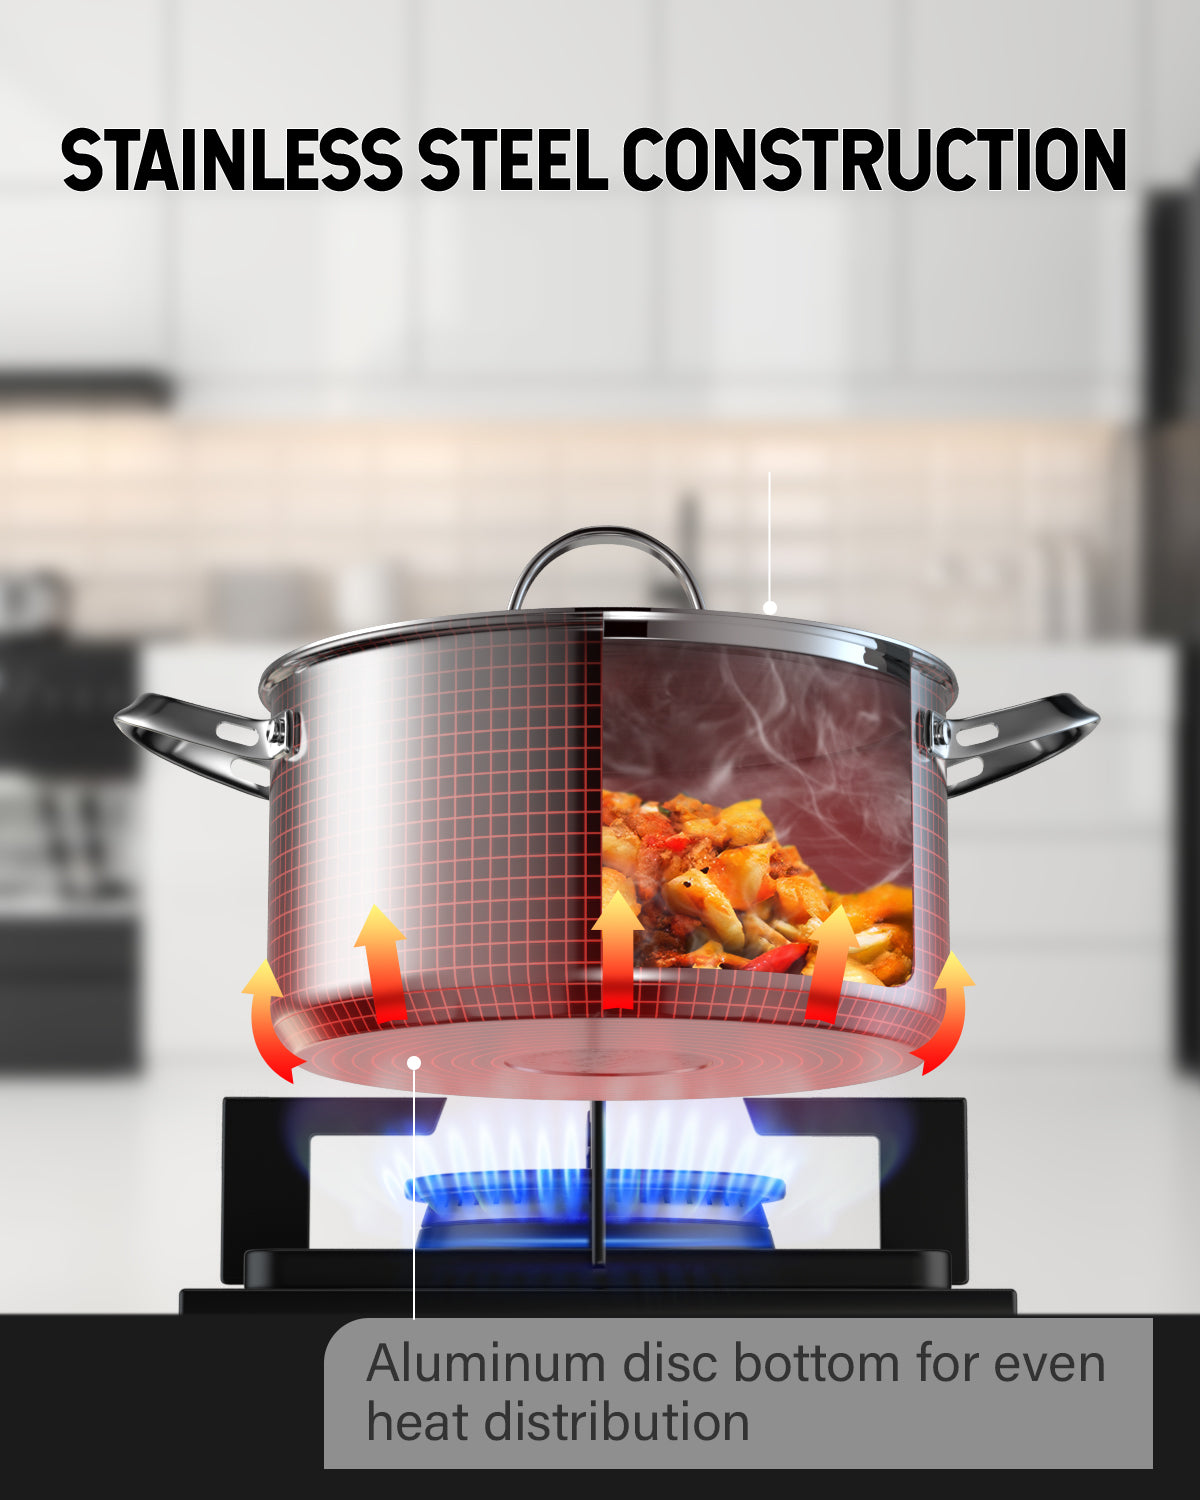 Cooks Standard Professional Grade 11 qt. Stainless Steel Stock Pot